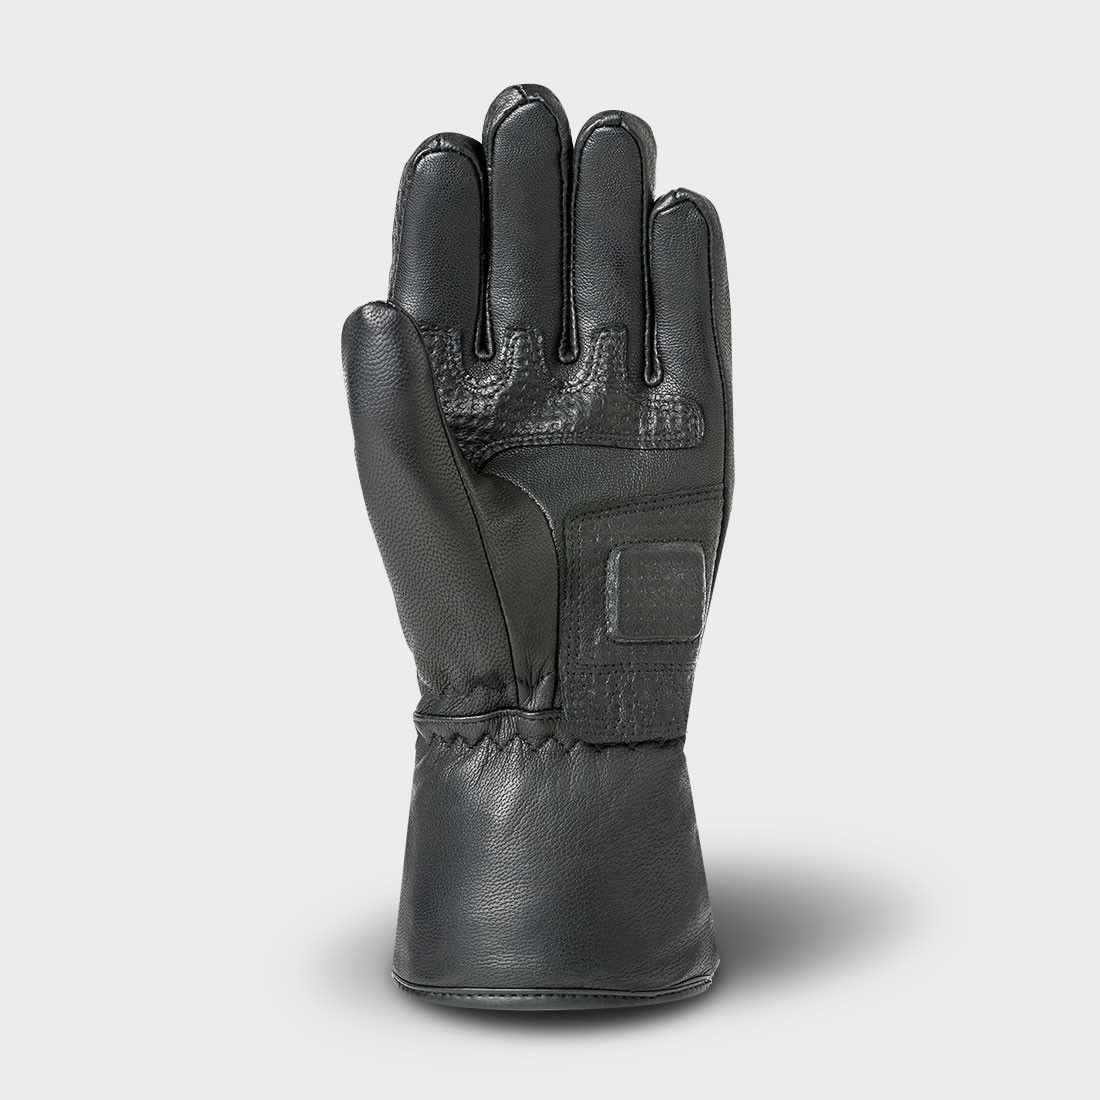 BELLA WINTER 2 - Winter motorcycle gloves